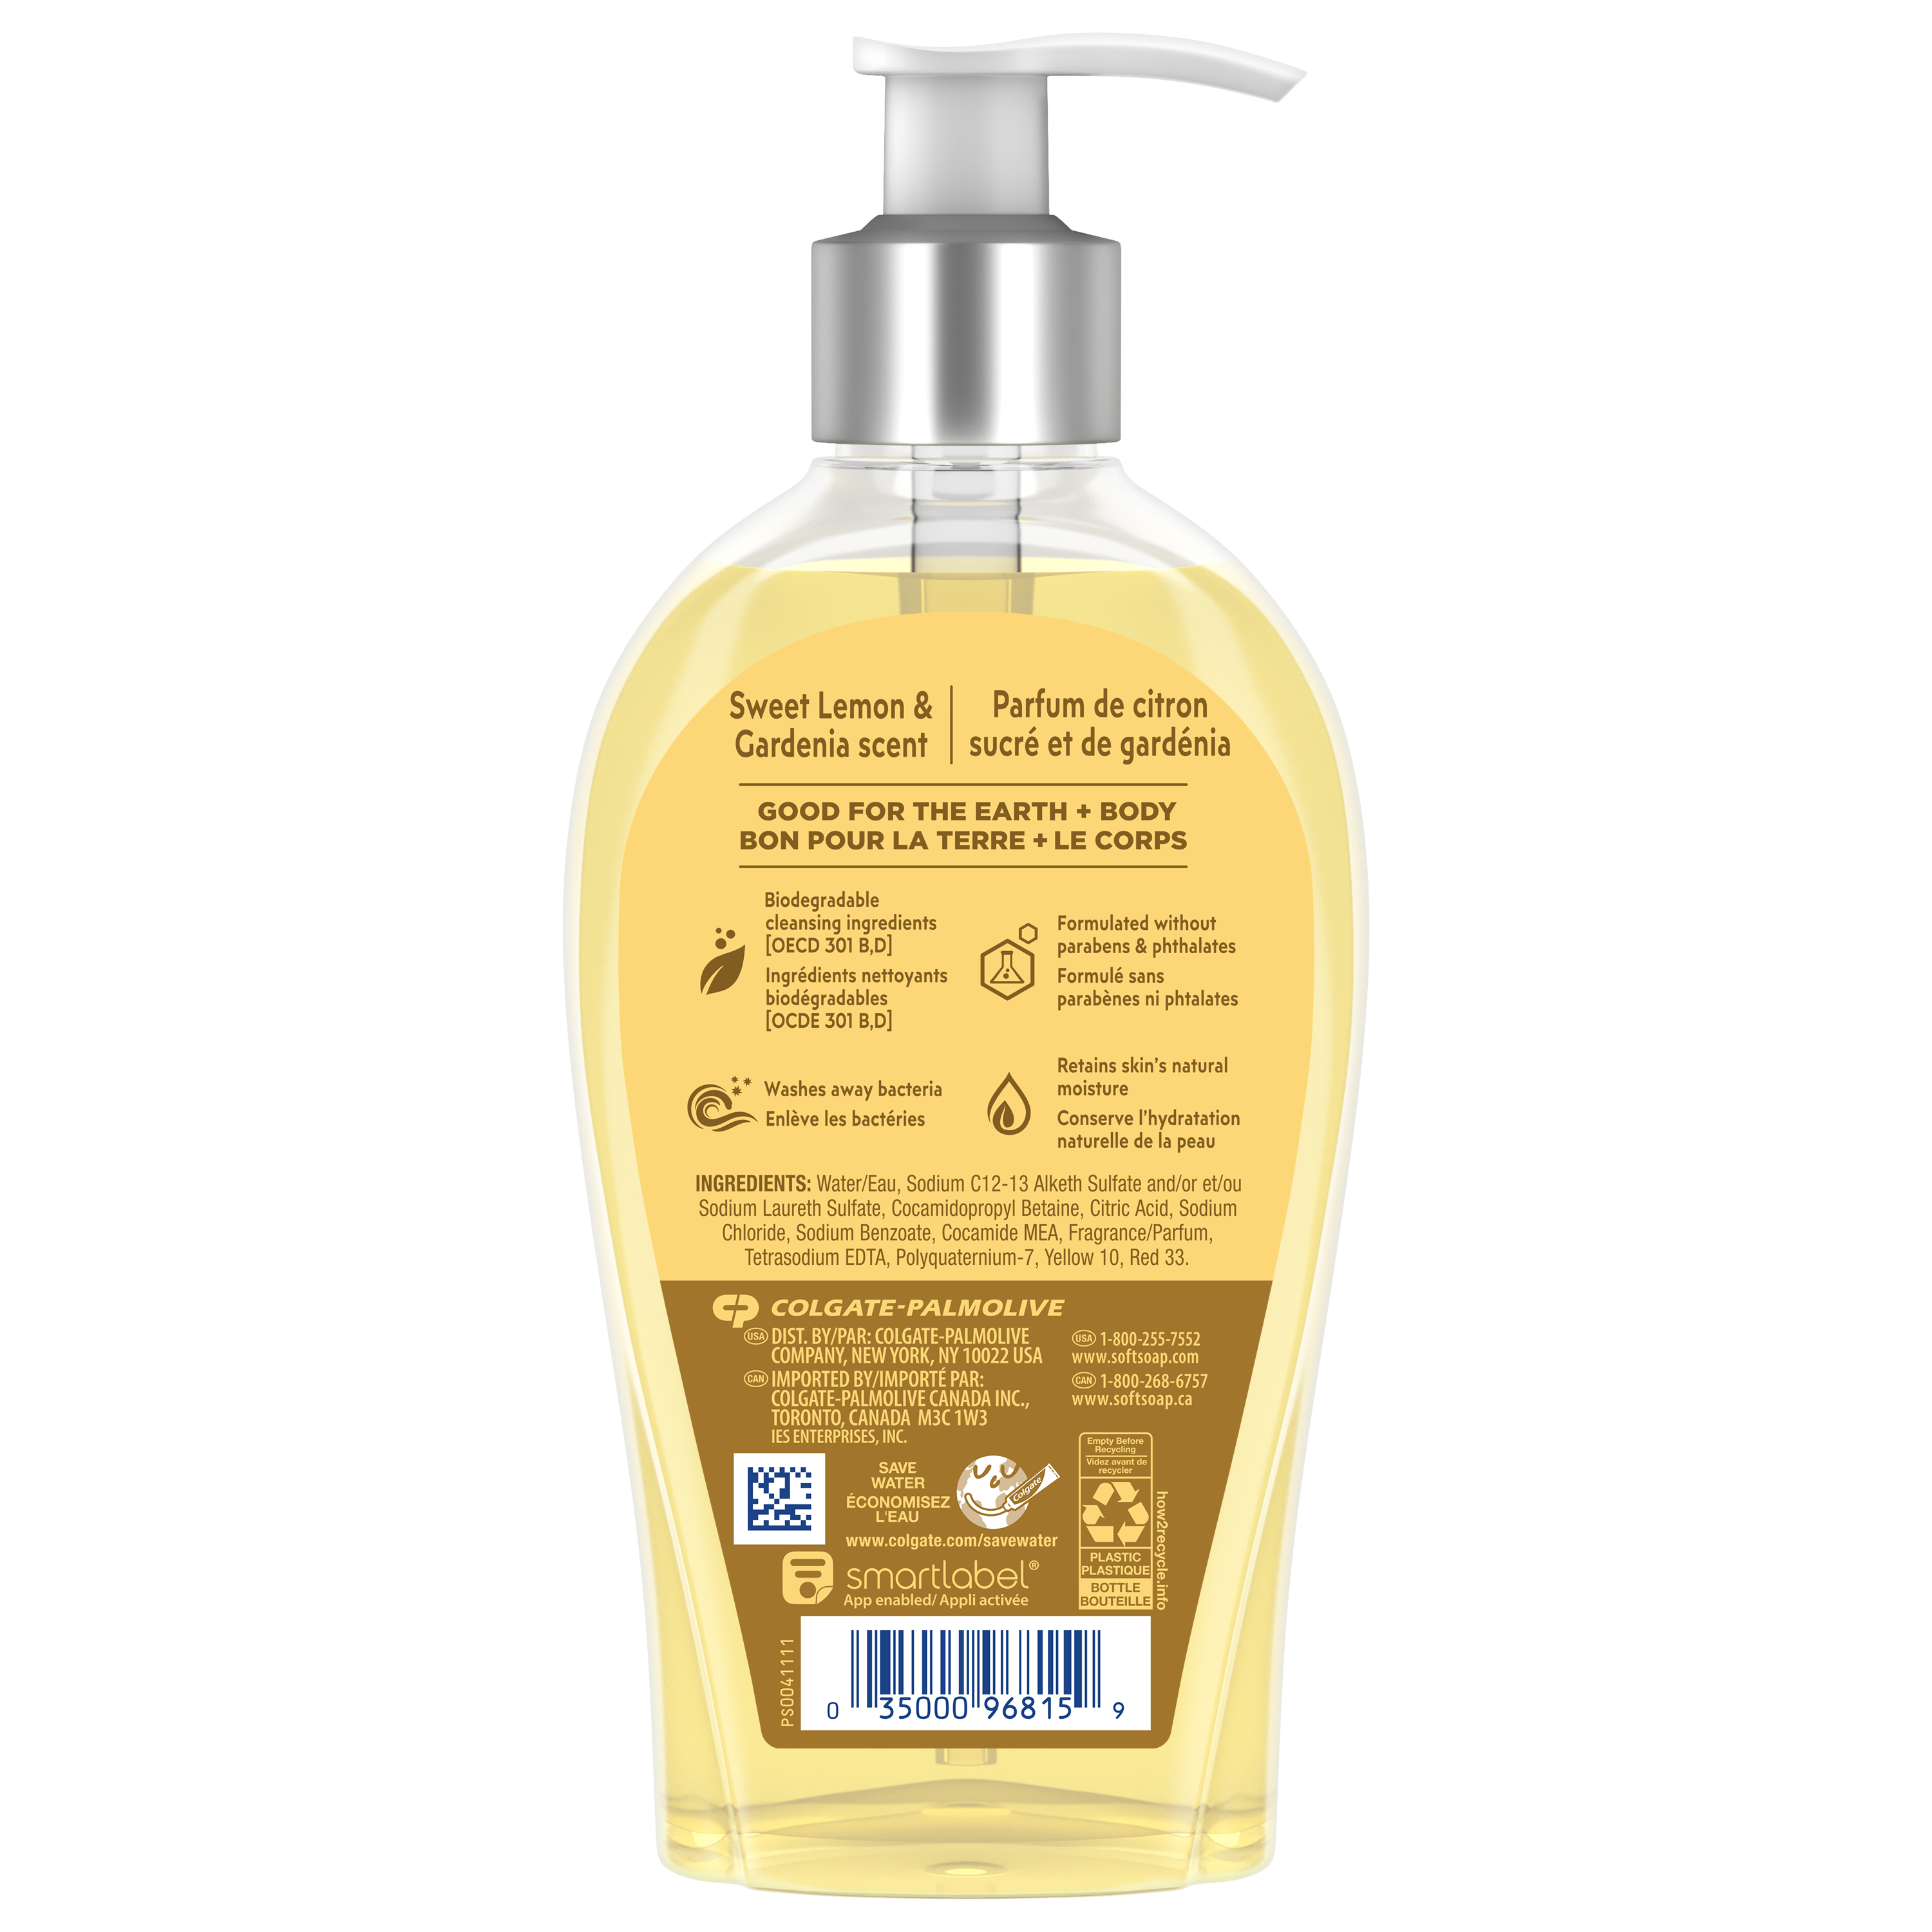 Softsoap Liquid Hand Soap, Sweet Lemon and Gardenia Scent, All Skin Type, 13 fl oz - image 4 of 6